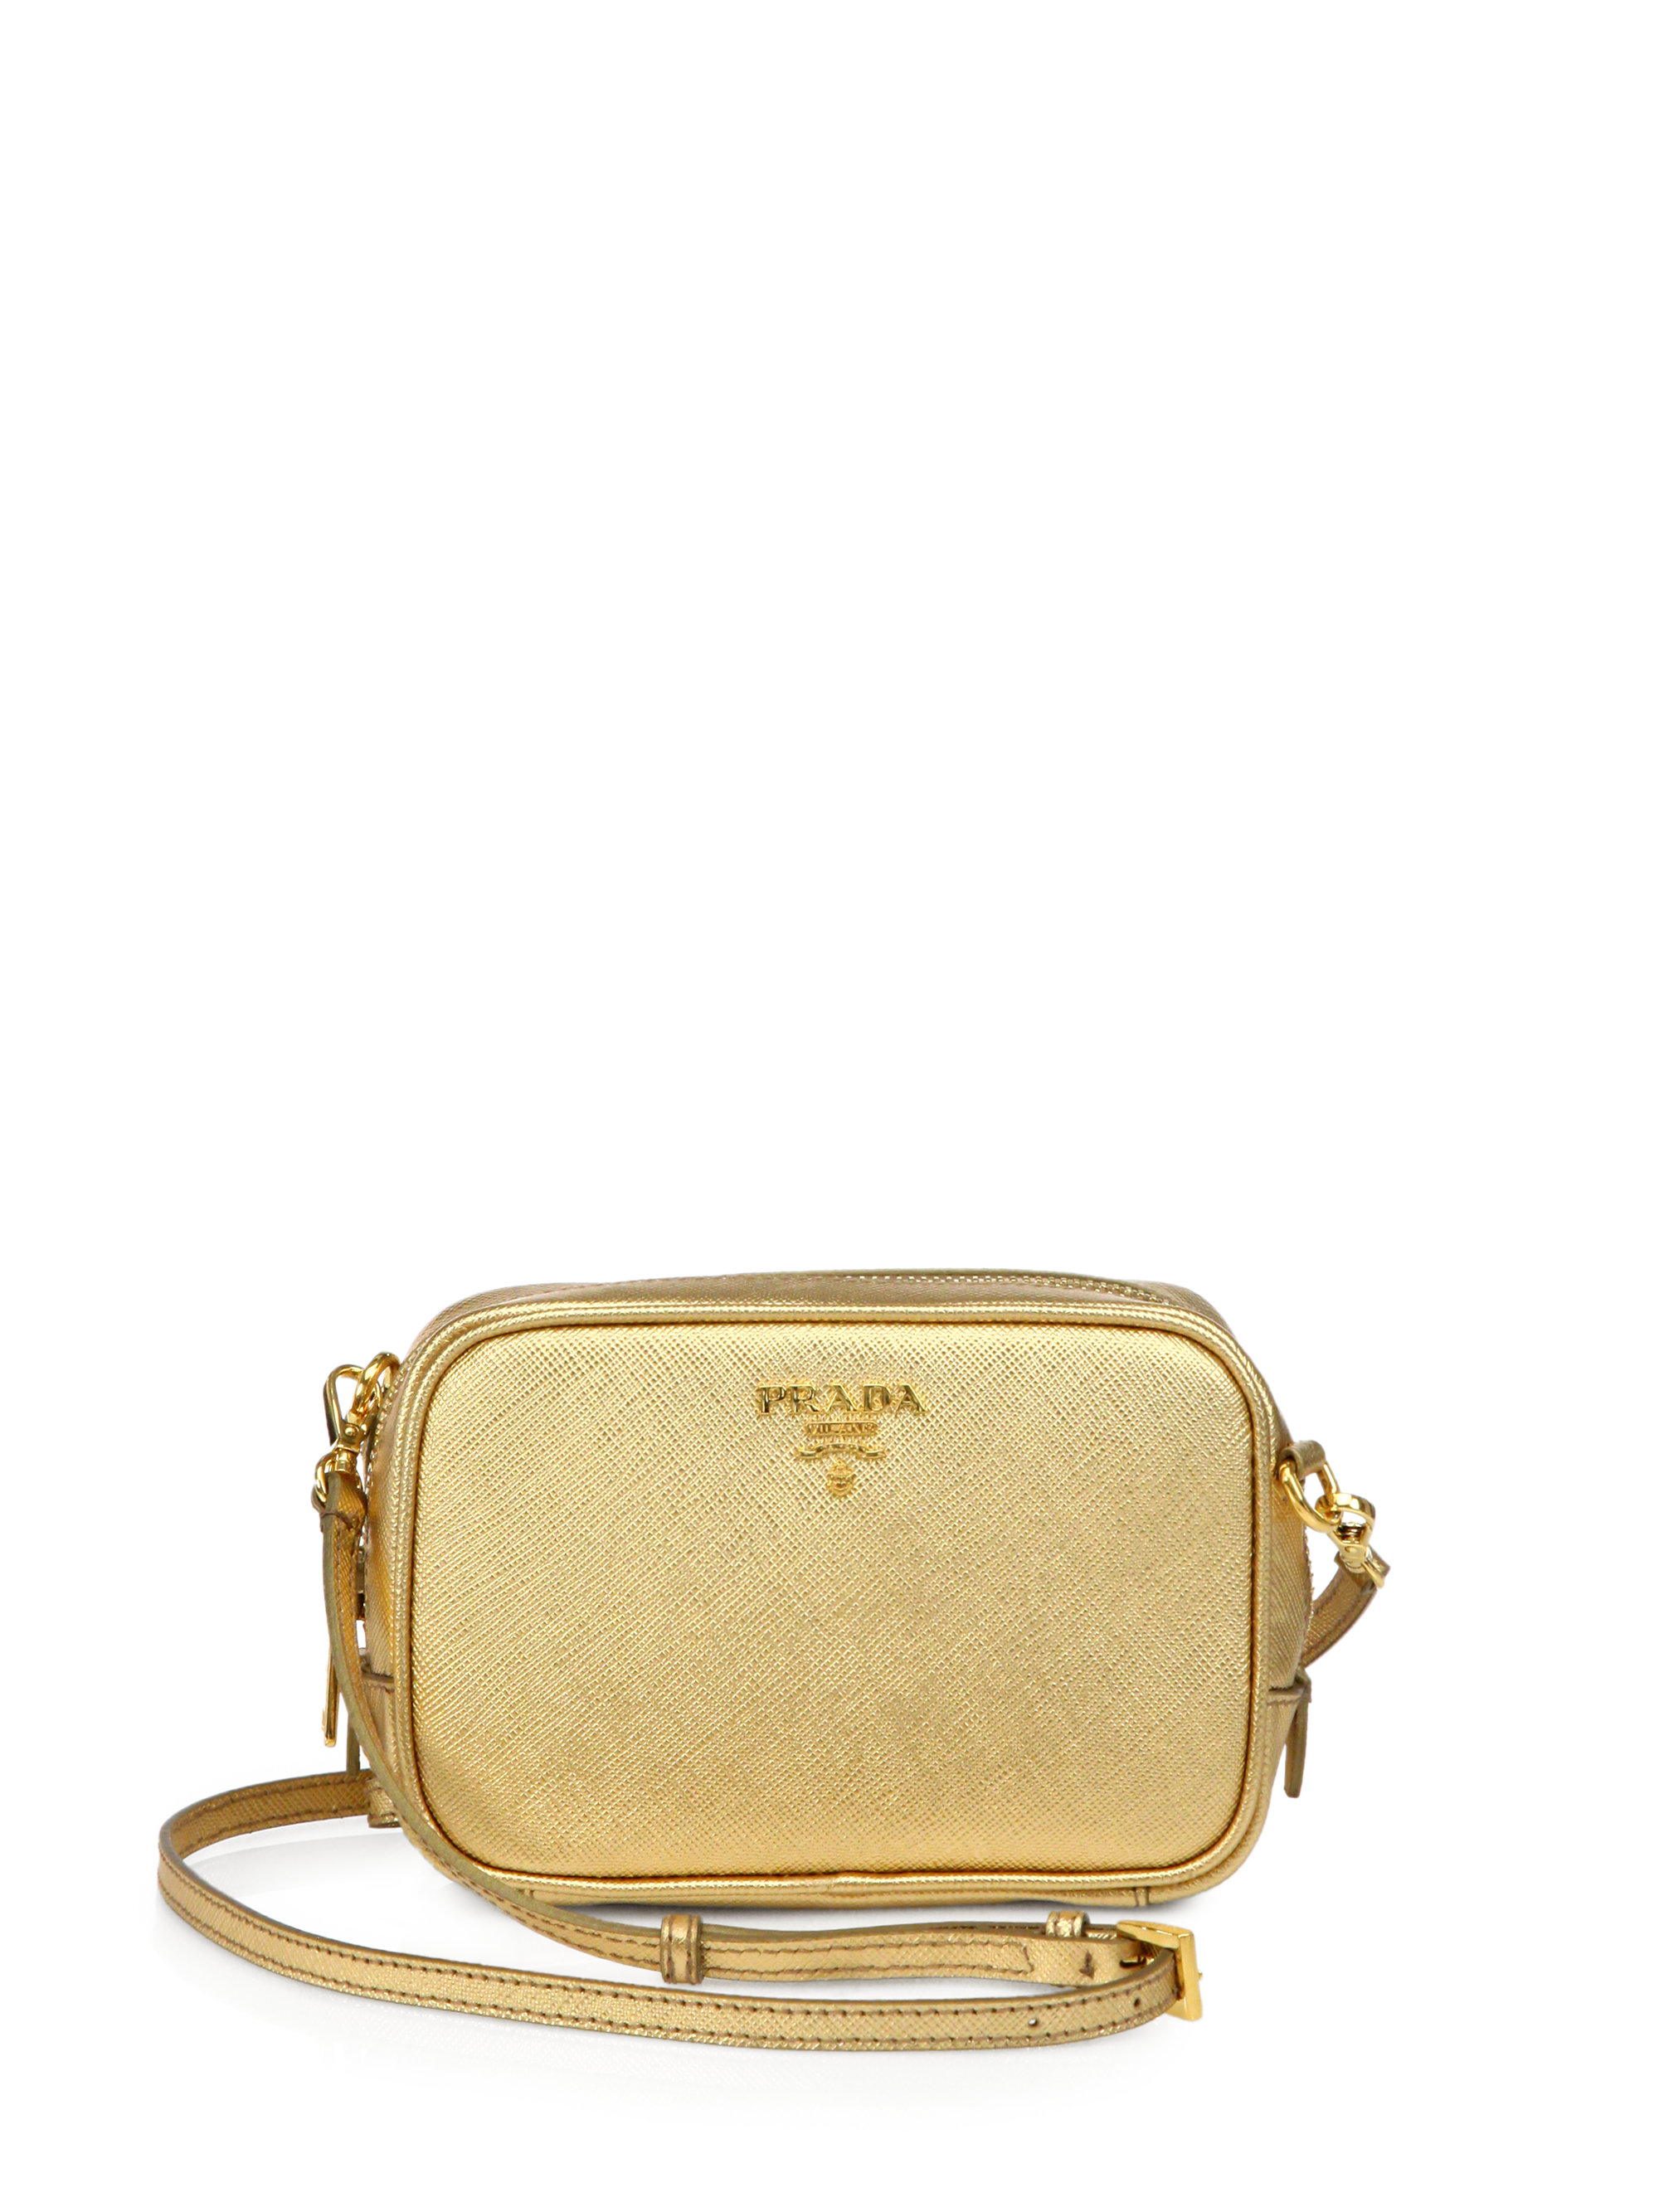 Prada Metallic Saffiano Camera Crossbody Bag in Gold (PLATINO) | Lyst  